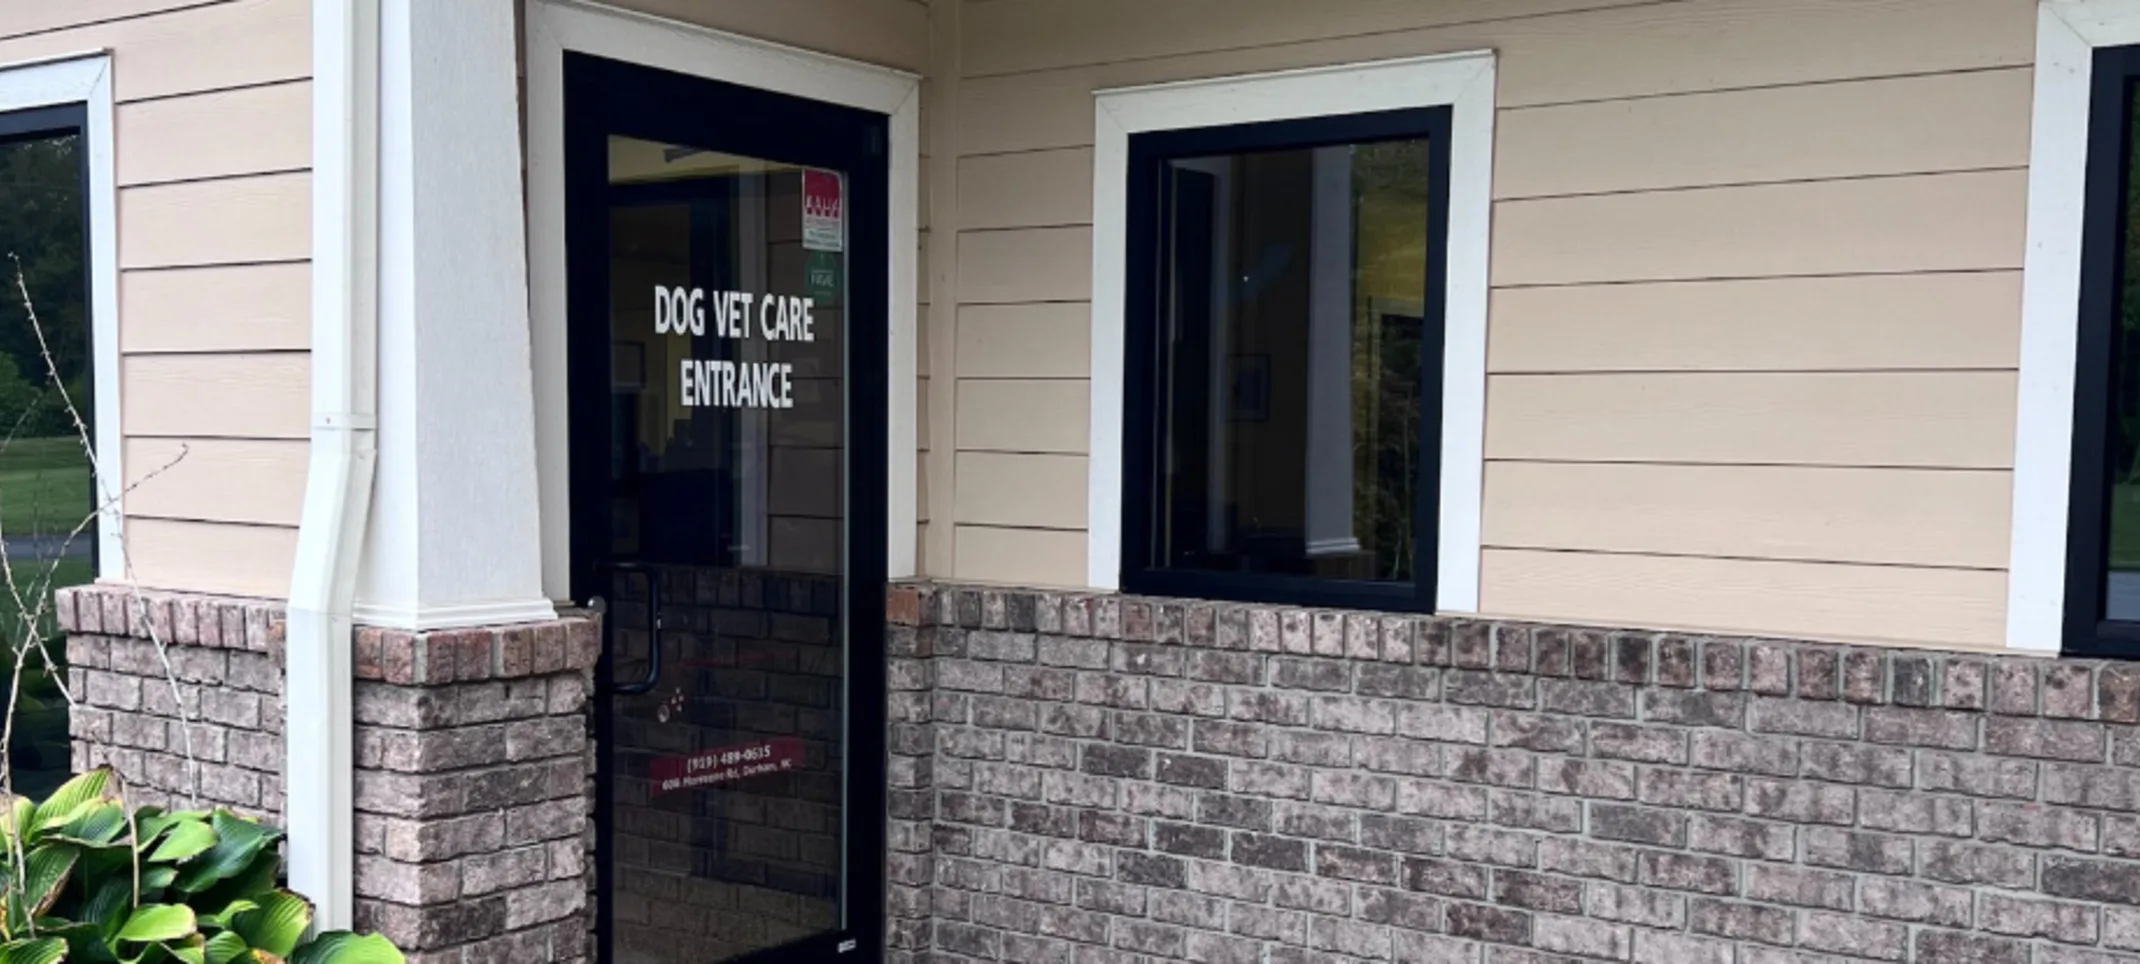 Dog vet care entrance door of the Roxboro Animal Hospital